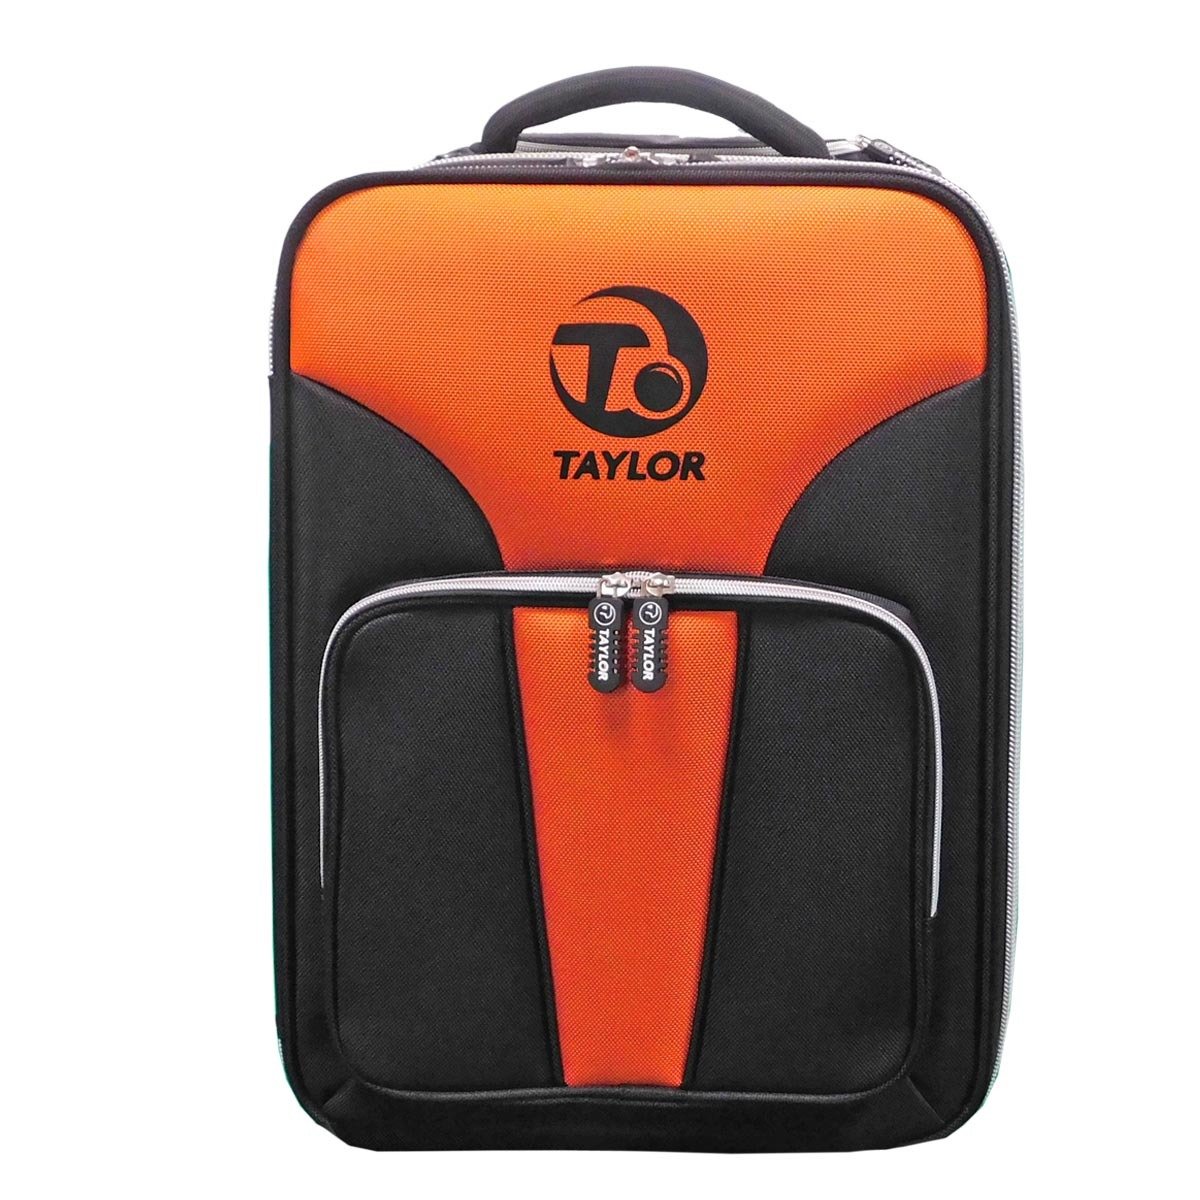 Taylor Sports Tourer Trolley Bag - 6 Colours